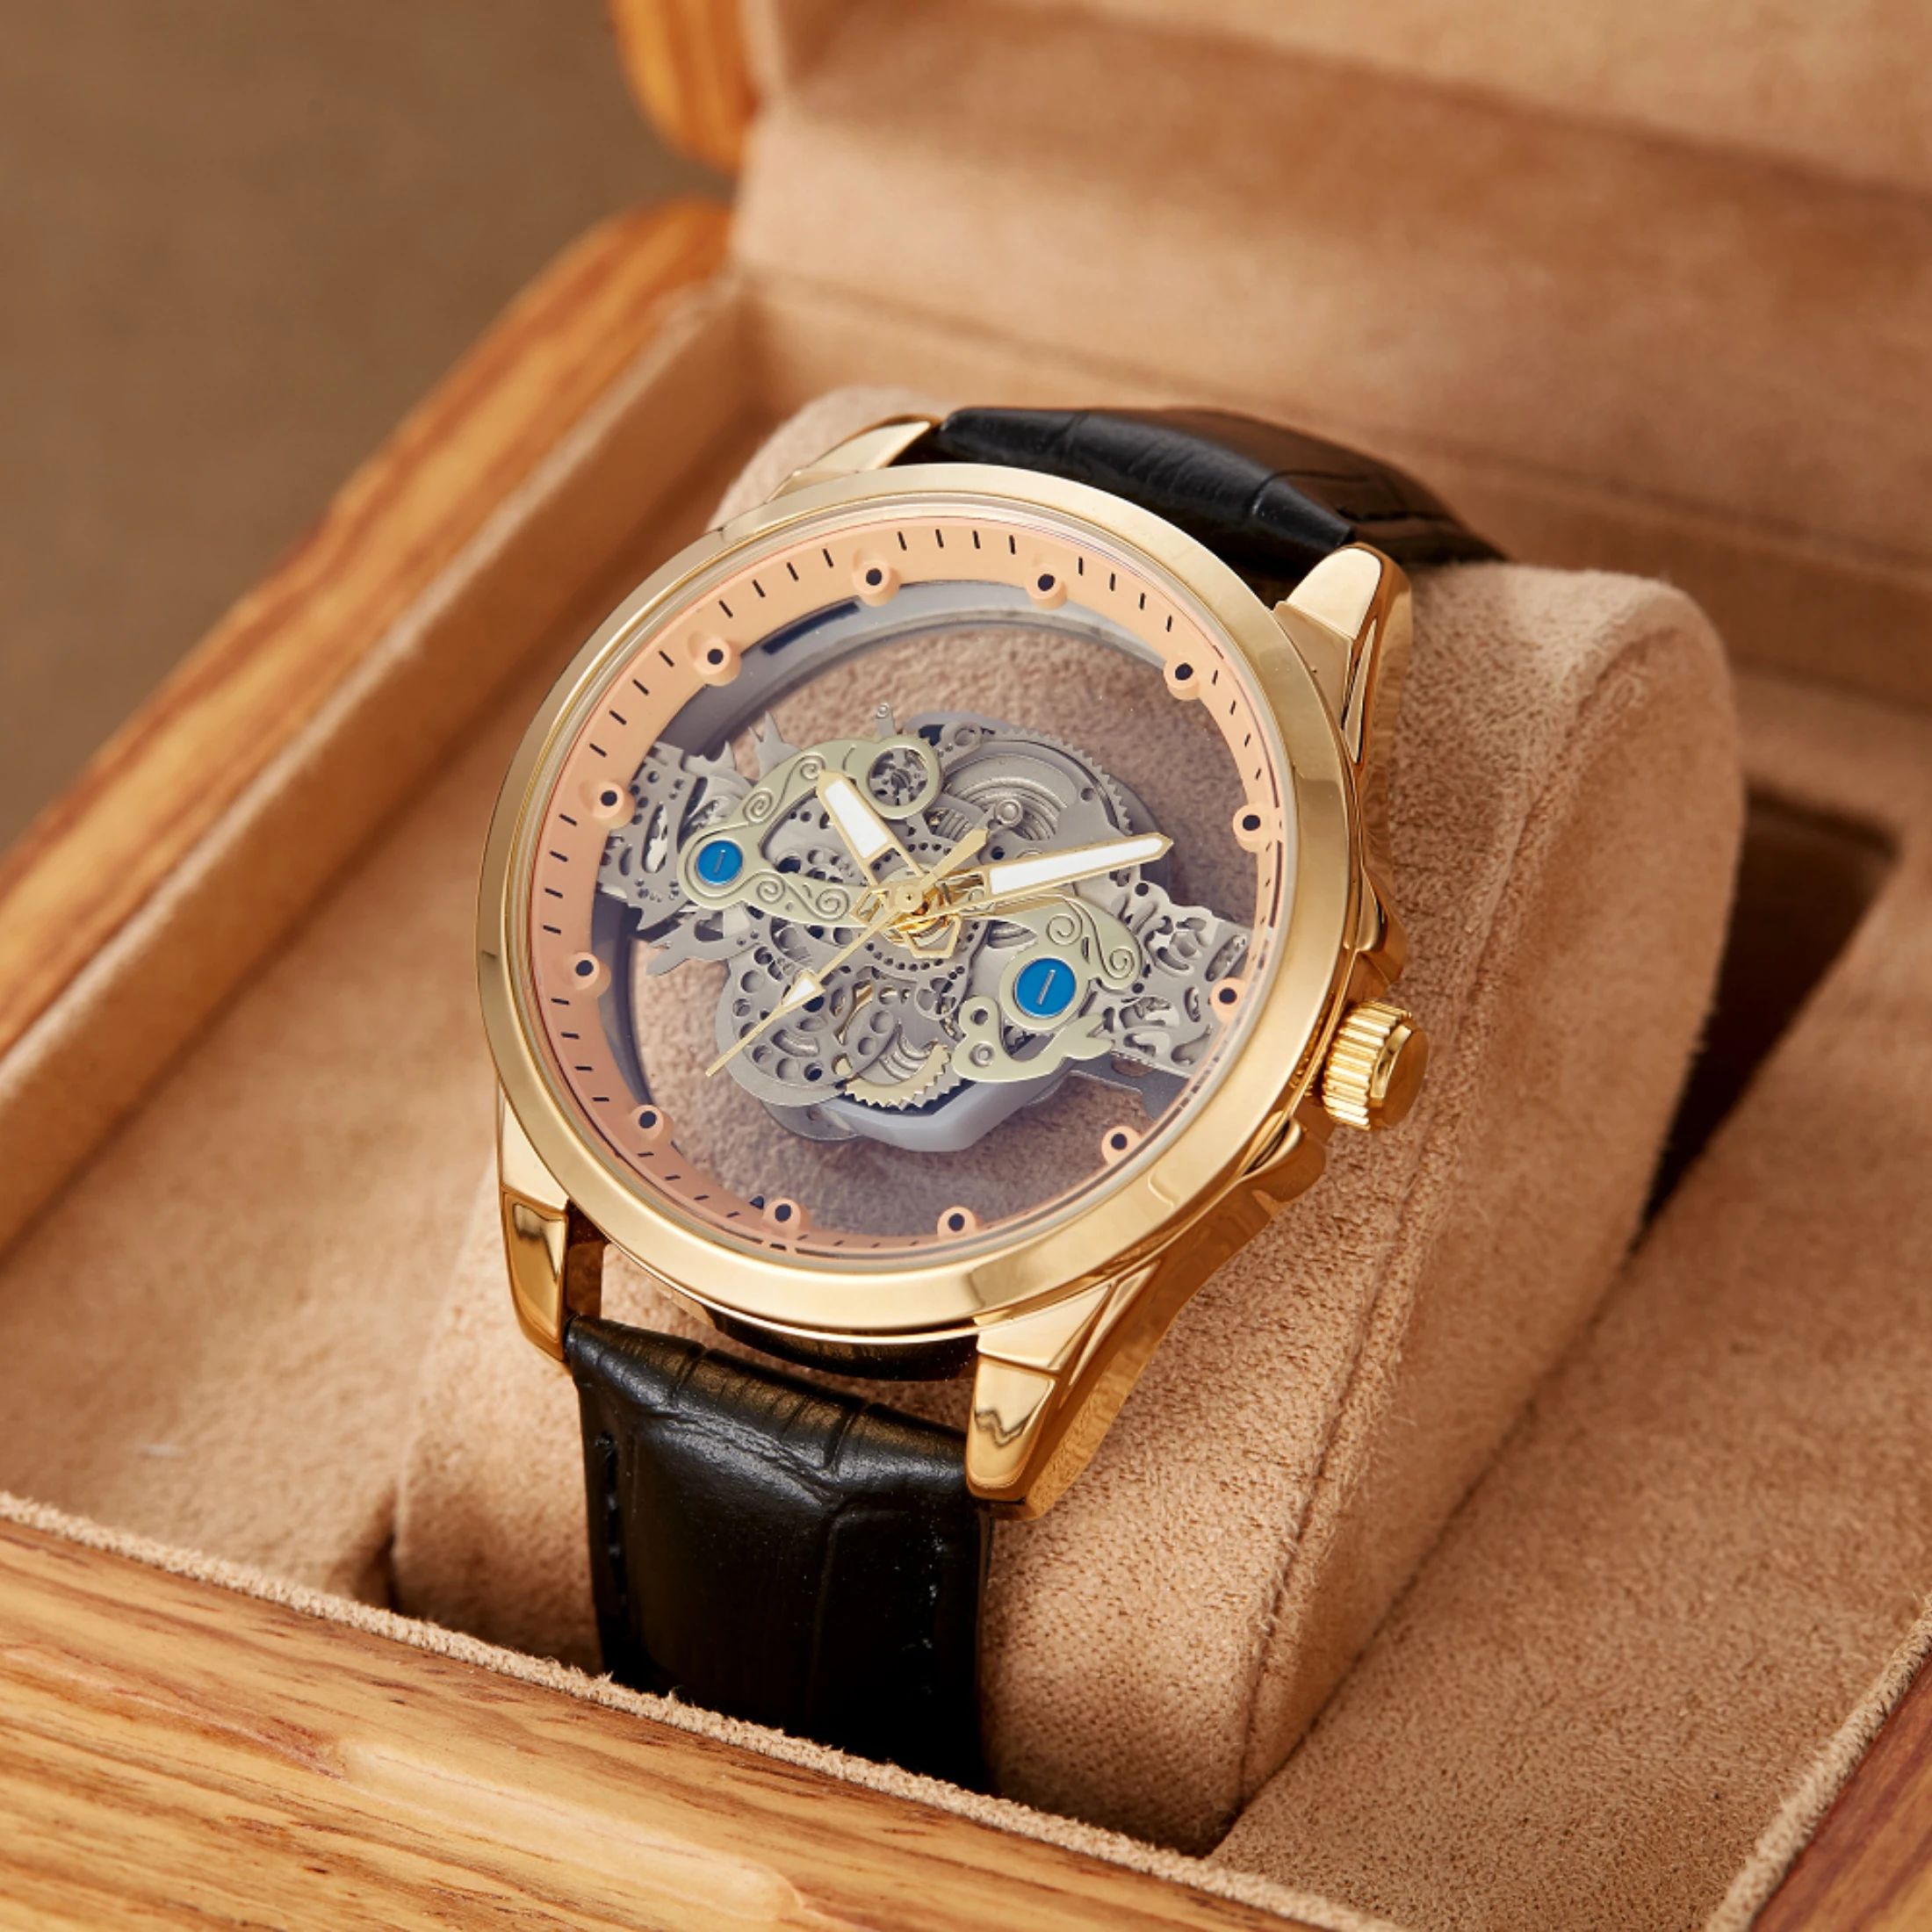 New Men's Watches Top Brand Luxury Original Waterproof Quartz Watch for Man Gold Skeleton Style 24 Hour Day Night часы мужские